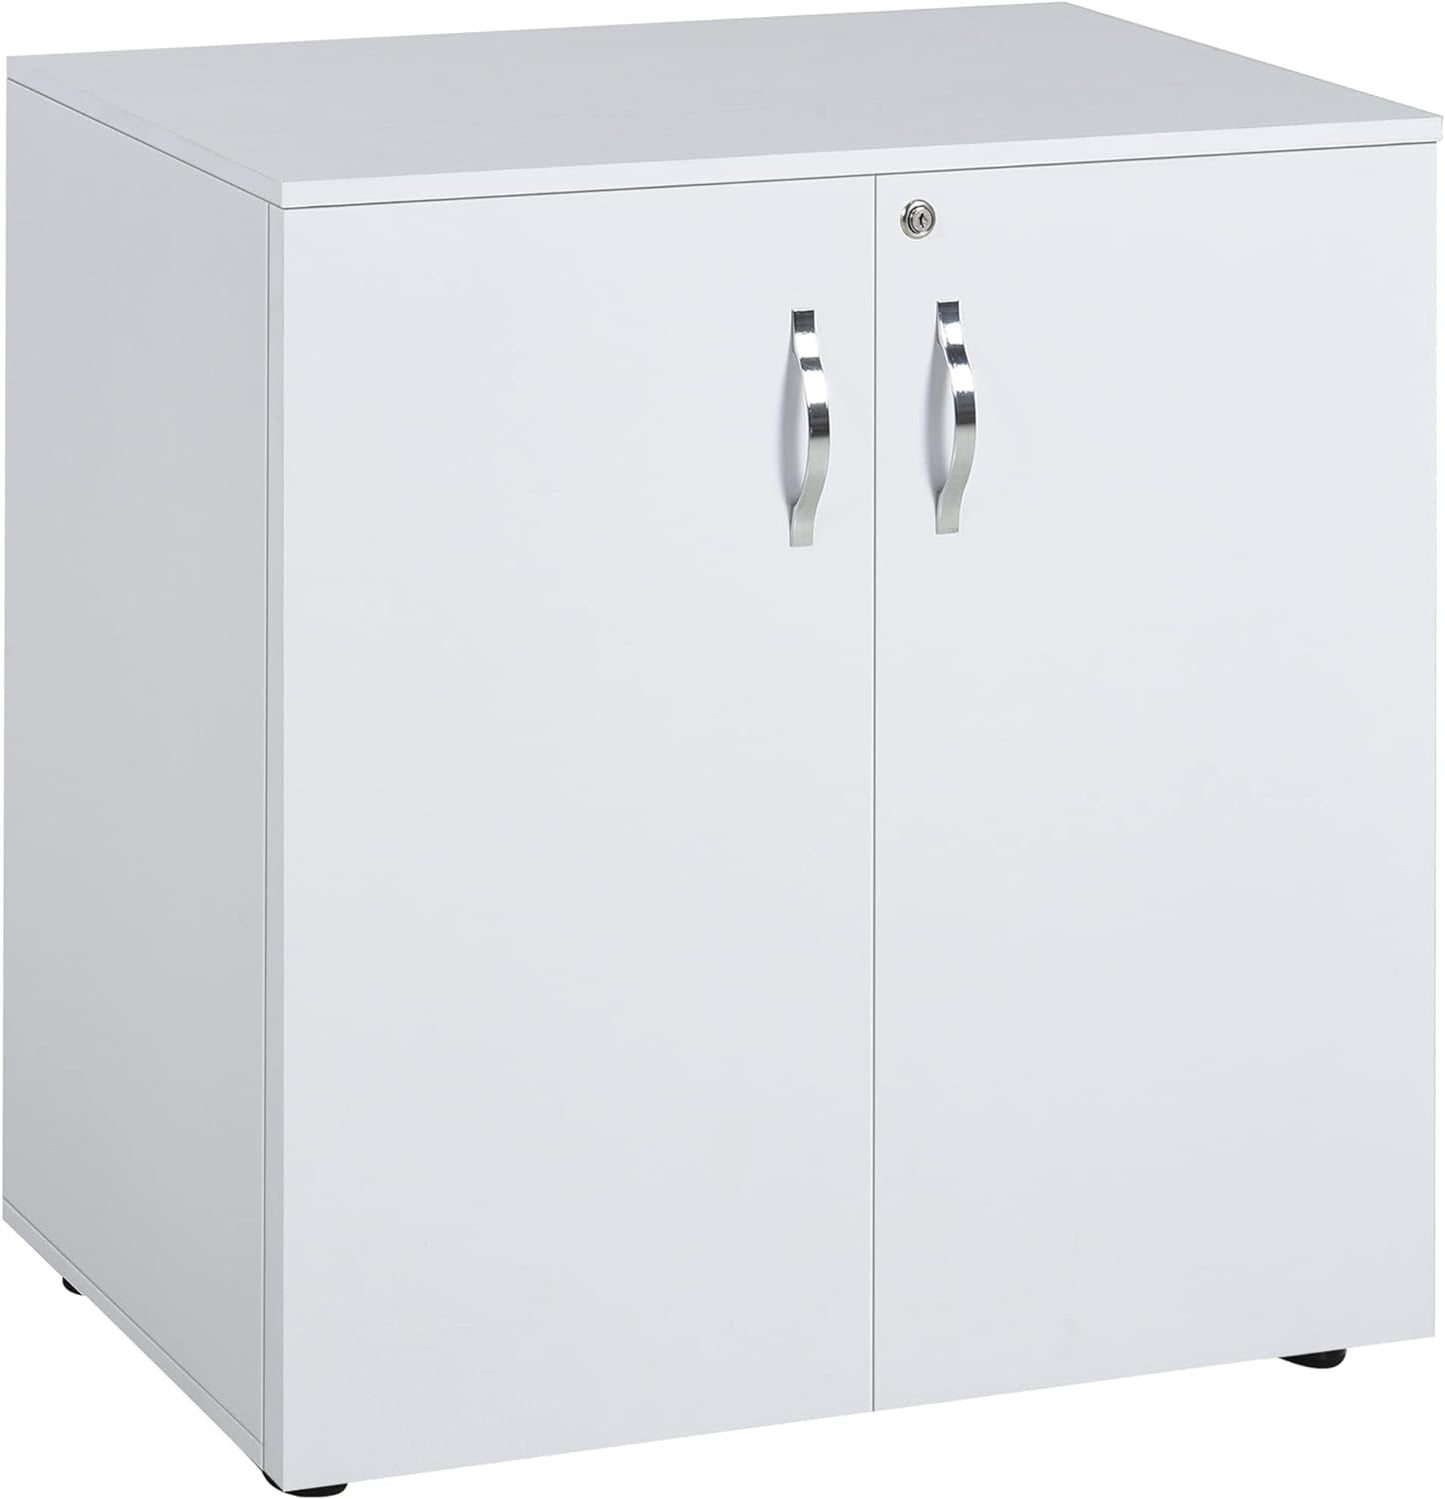 ProperAV Extra Lockable 2-Tier Storage Filing Cabinet - maplin.co.uk